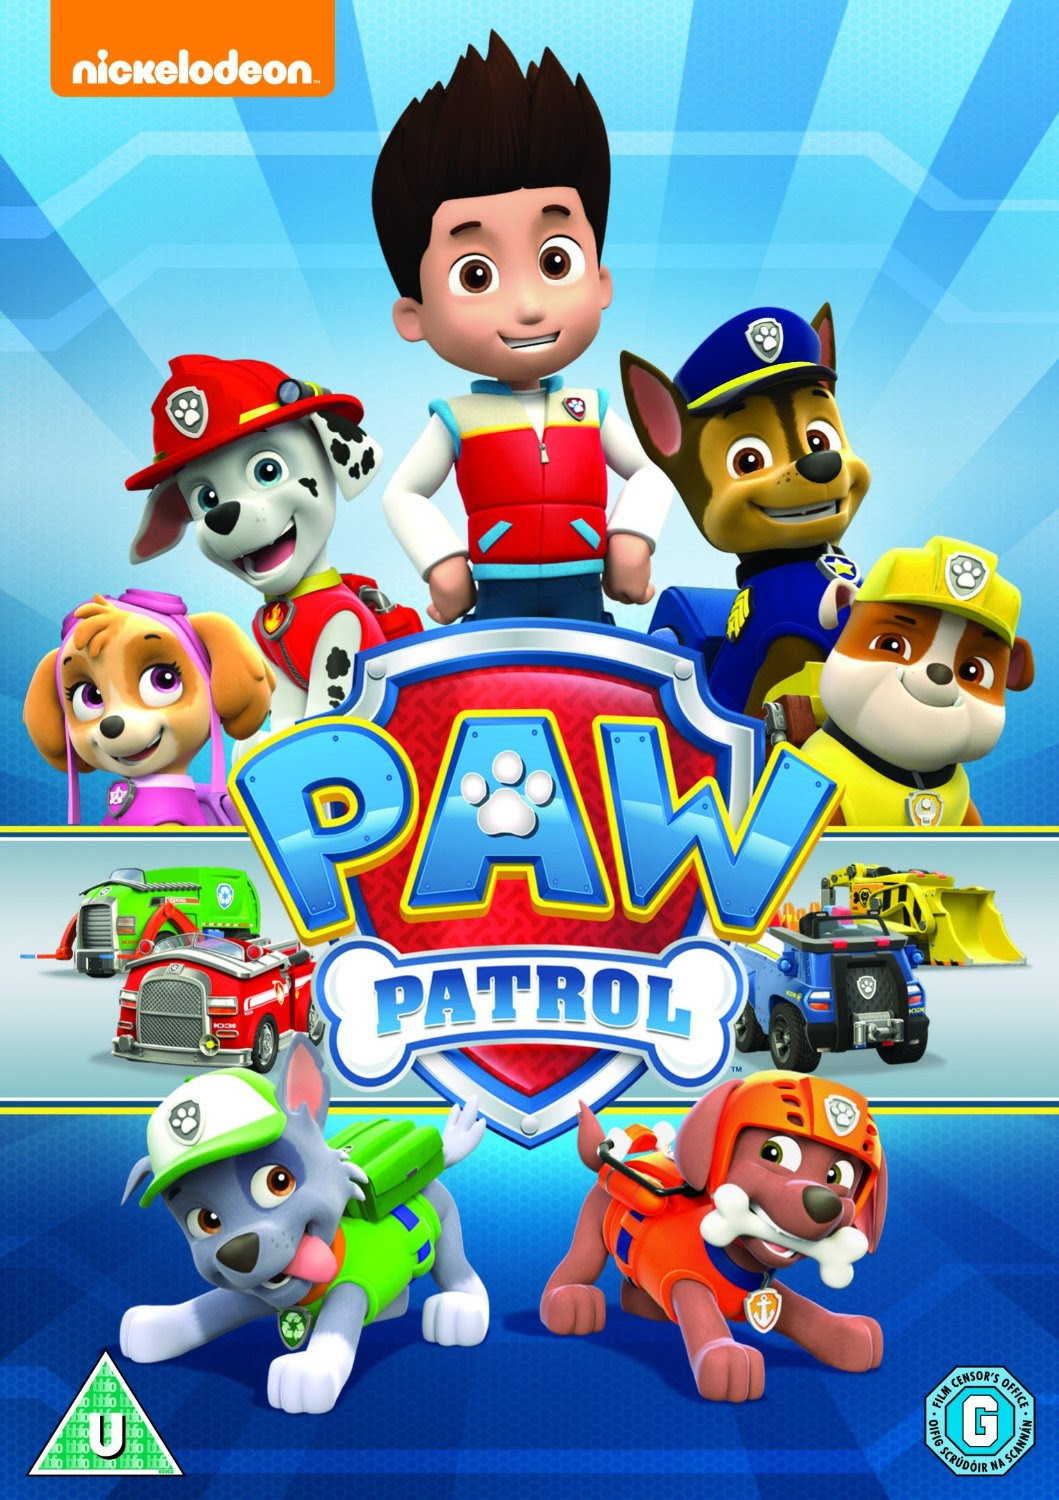 paw patrol rescue: PAW Patrol British English Patrol Wiki powered Wikia